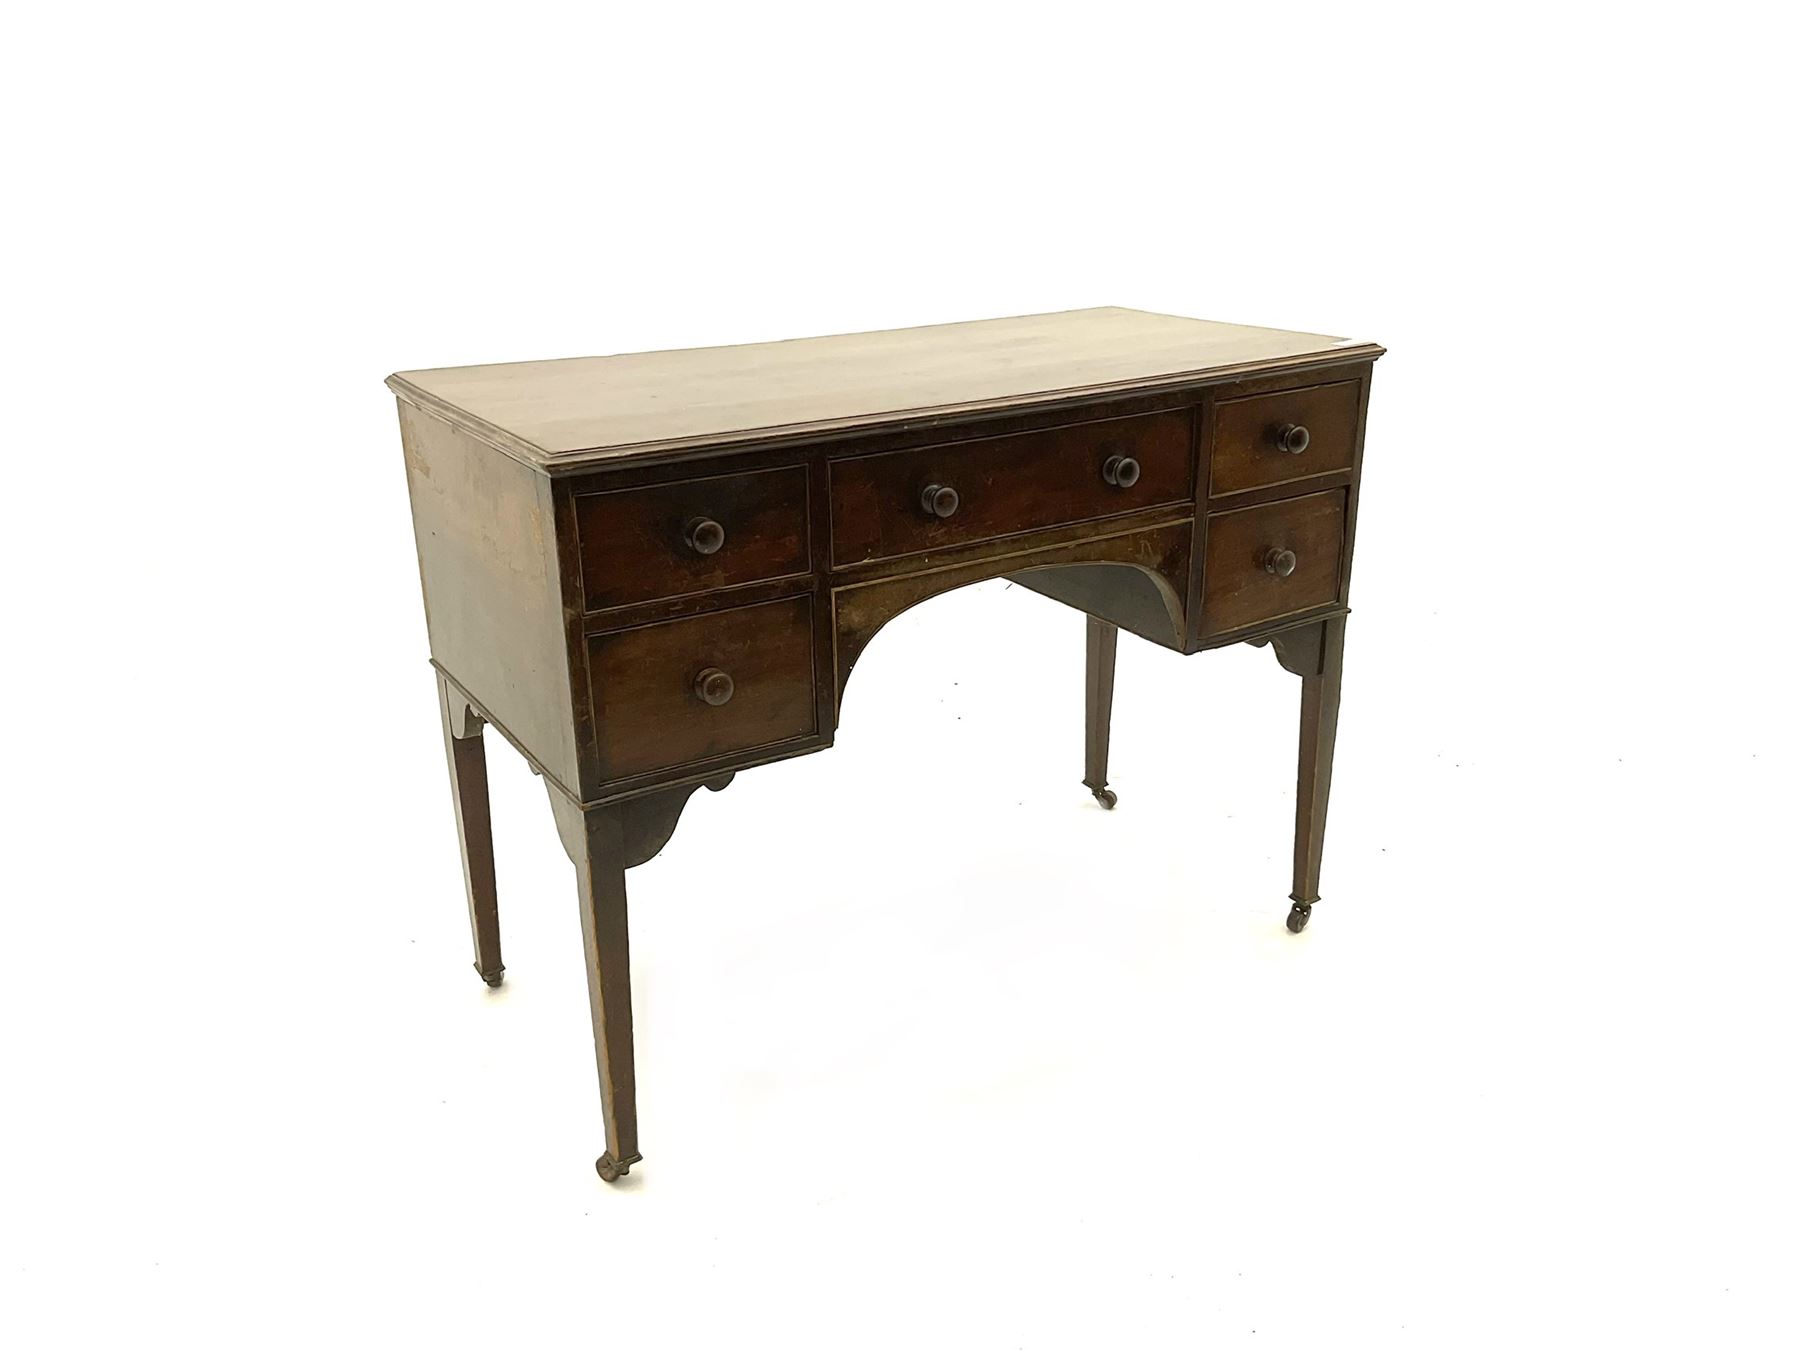 19th century mahogany kneehole dressing table desk - Image 2 of 3